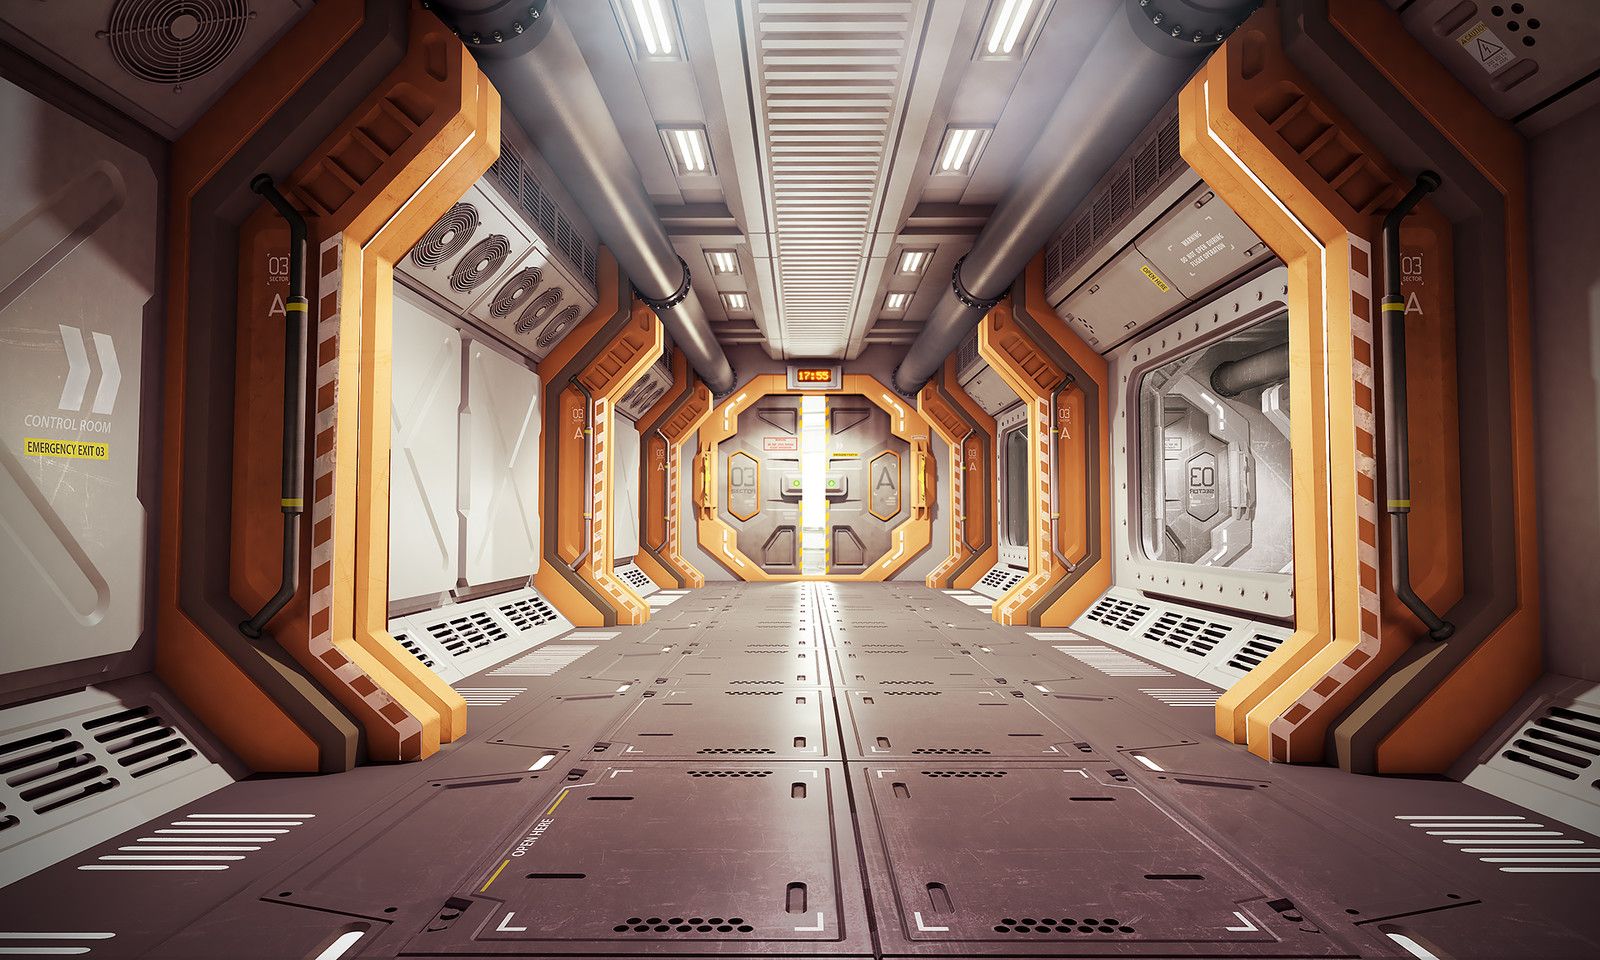 Turbolin On Sci Fi In Spaceship Interior Space